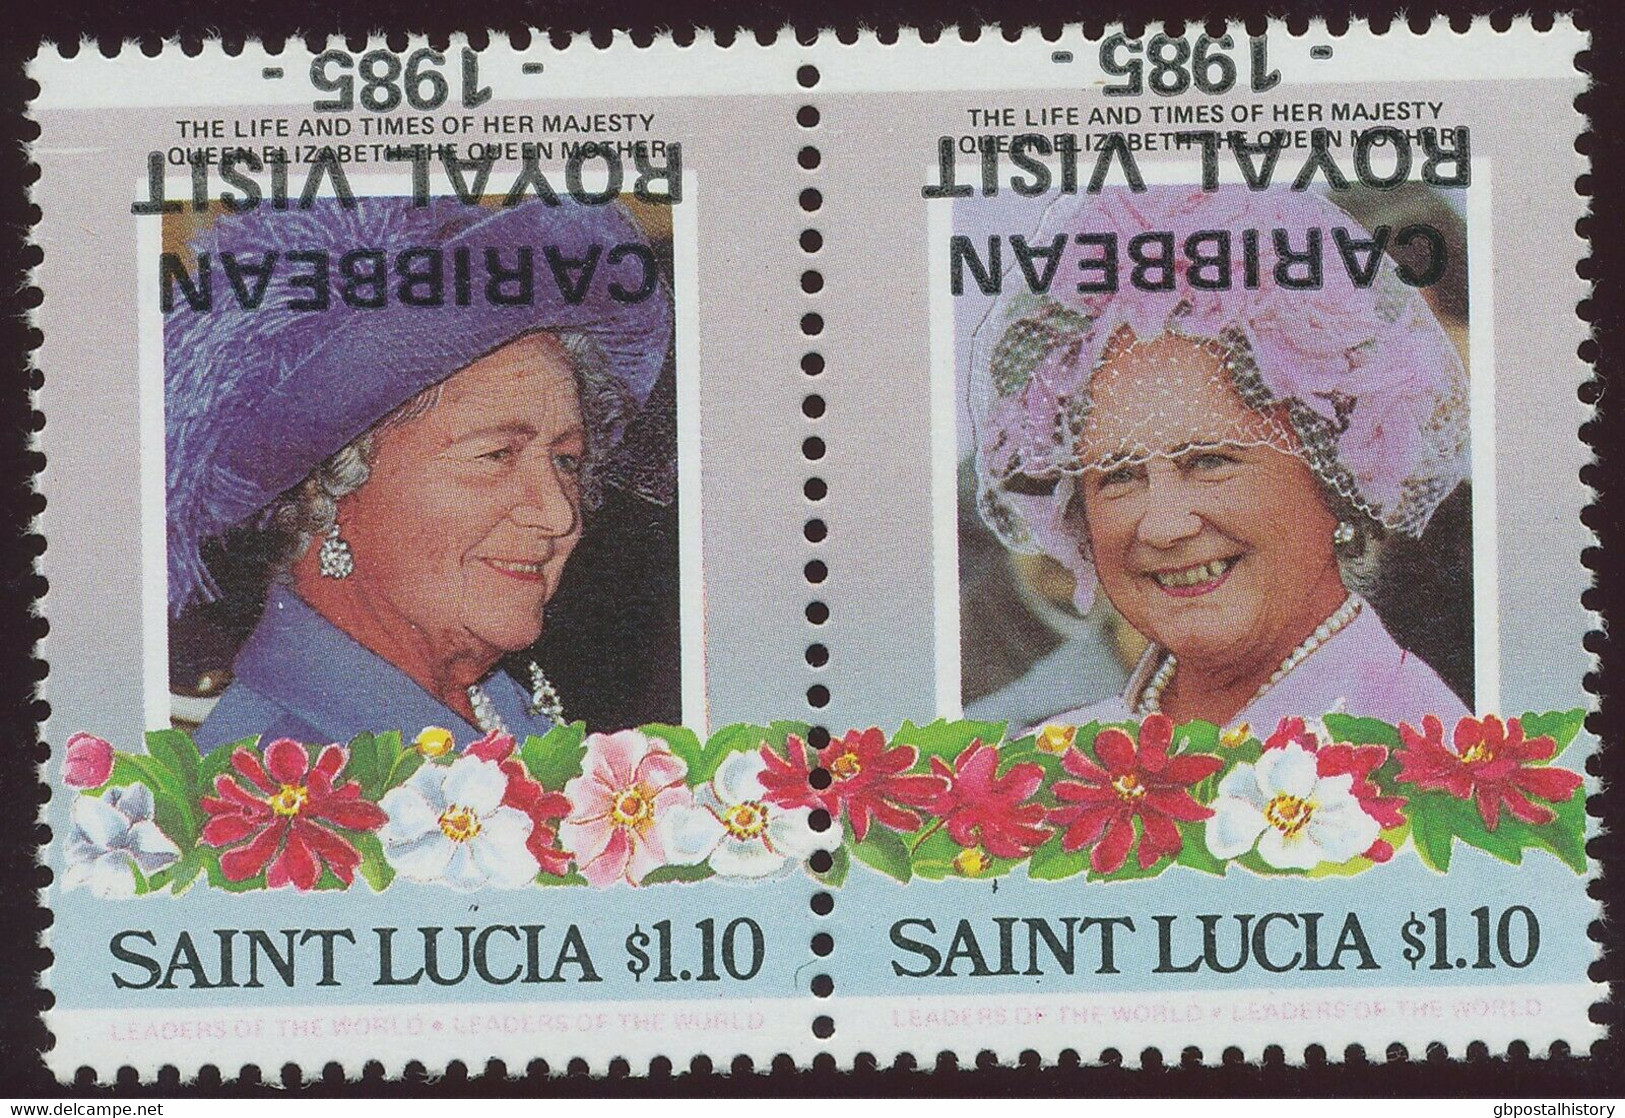 ST. LUCIA 1985 Queen Elizabeth Visit In The Caribbean U/M INVERTED OVERPRINT - St.Lucia (1979-...)